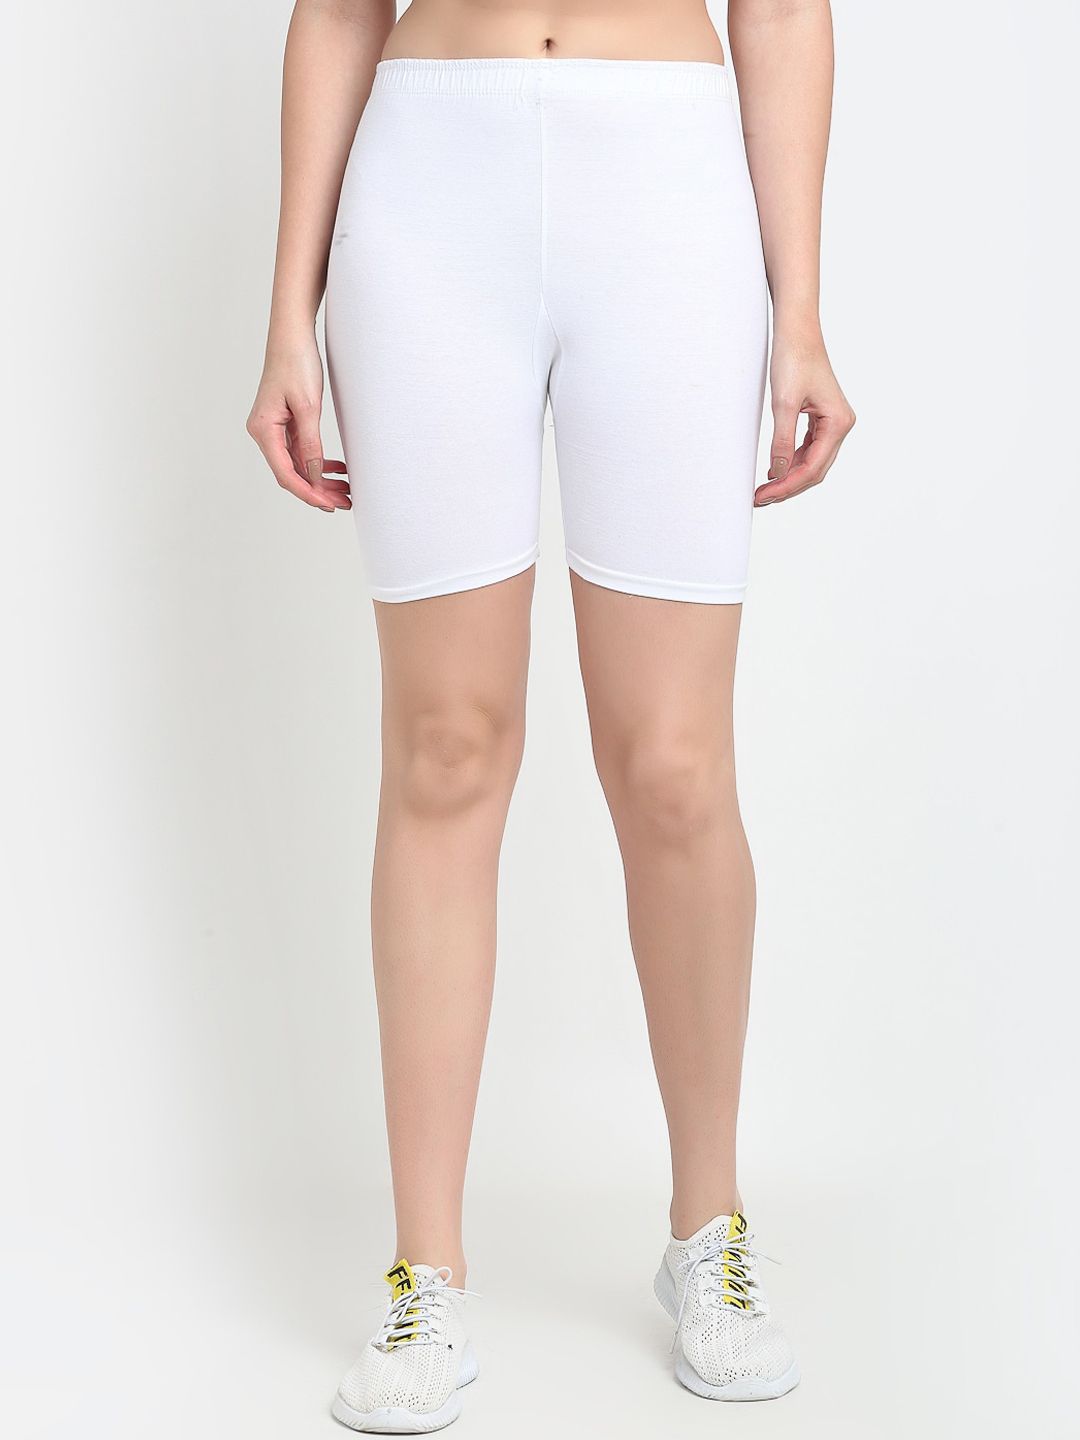 GRACIT Women White Solid Biker Shorts Price in India